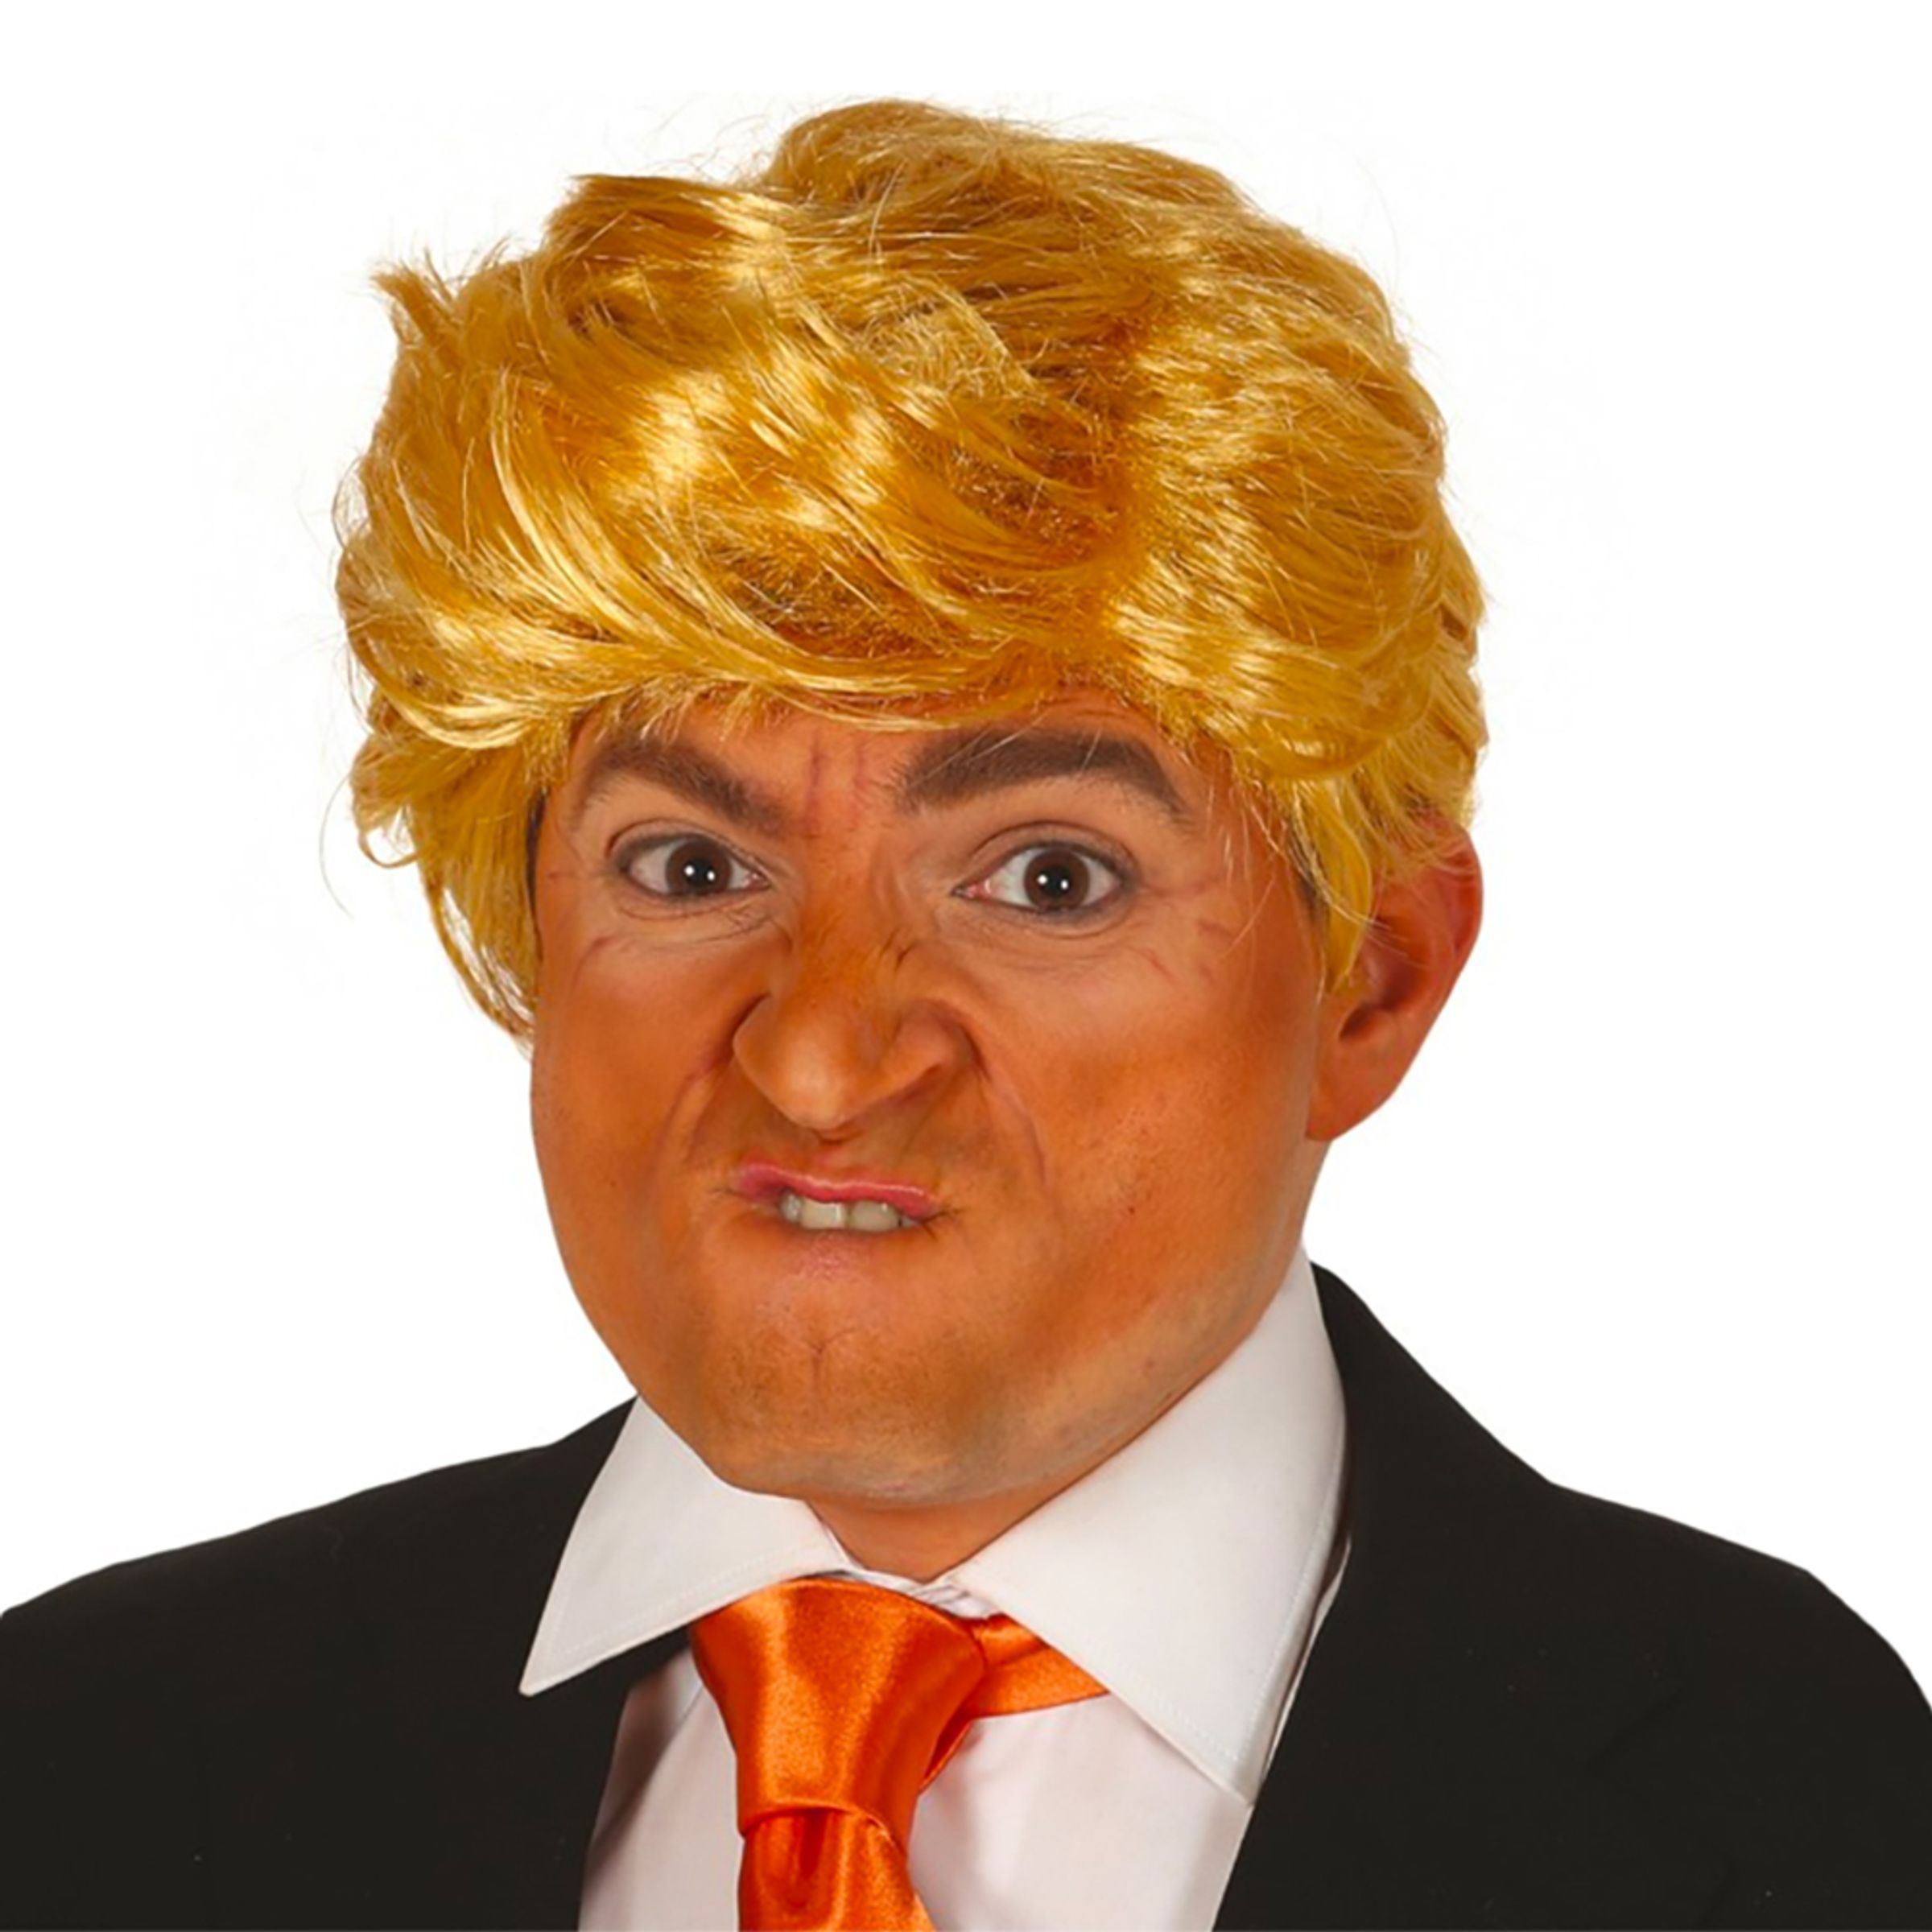 President Peruk Blond - One size